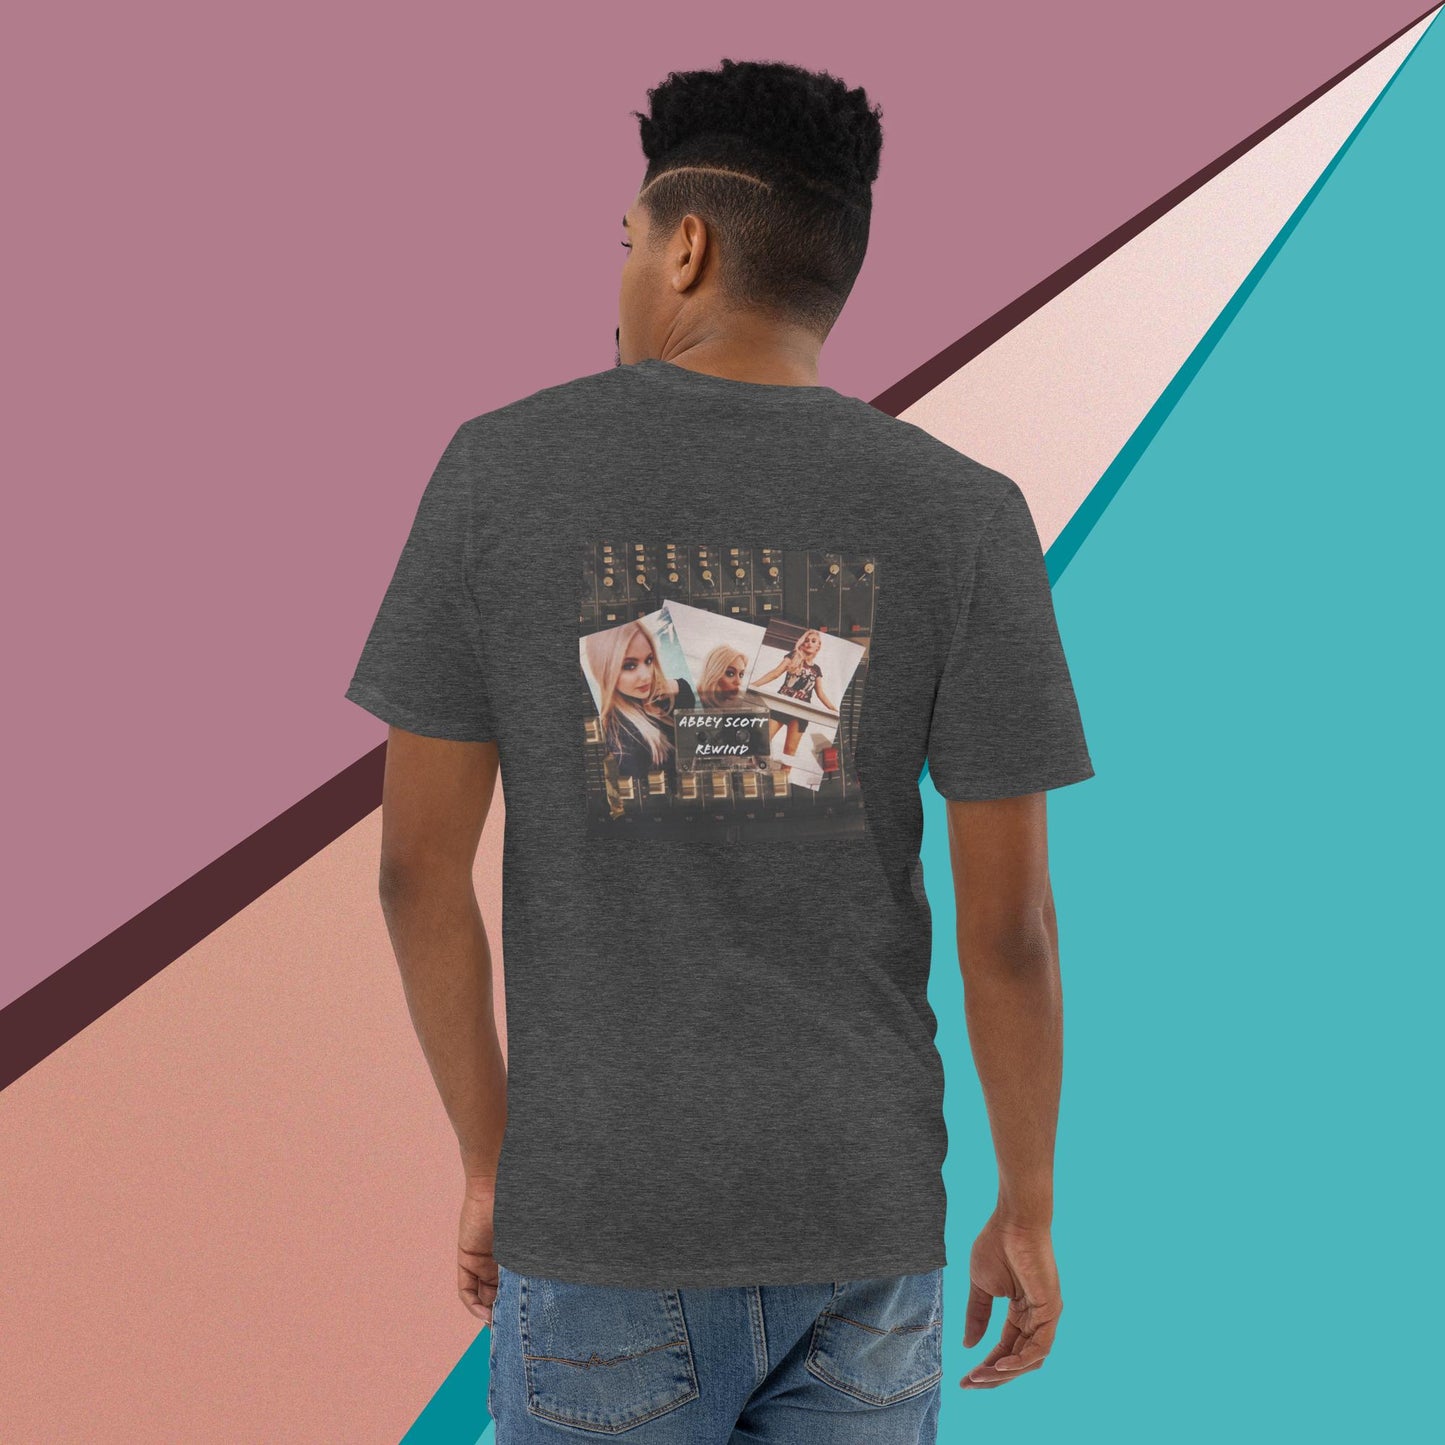 Abbey Scott "Rewind" Short-Sleeve T-Shirt (Unisex)